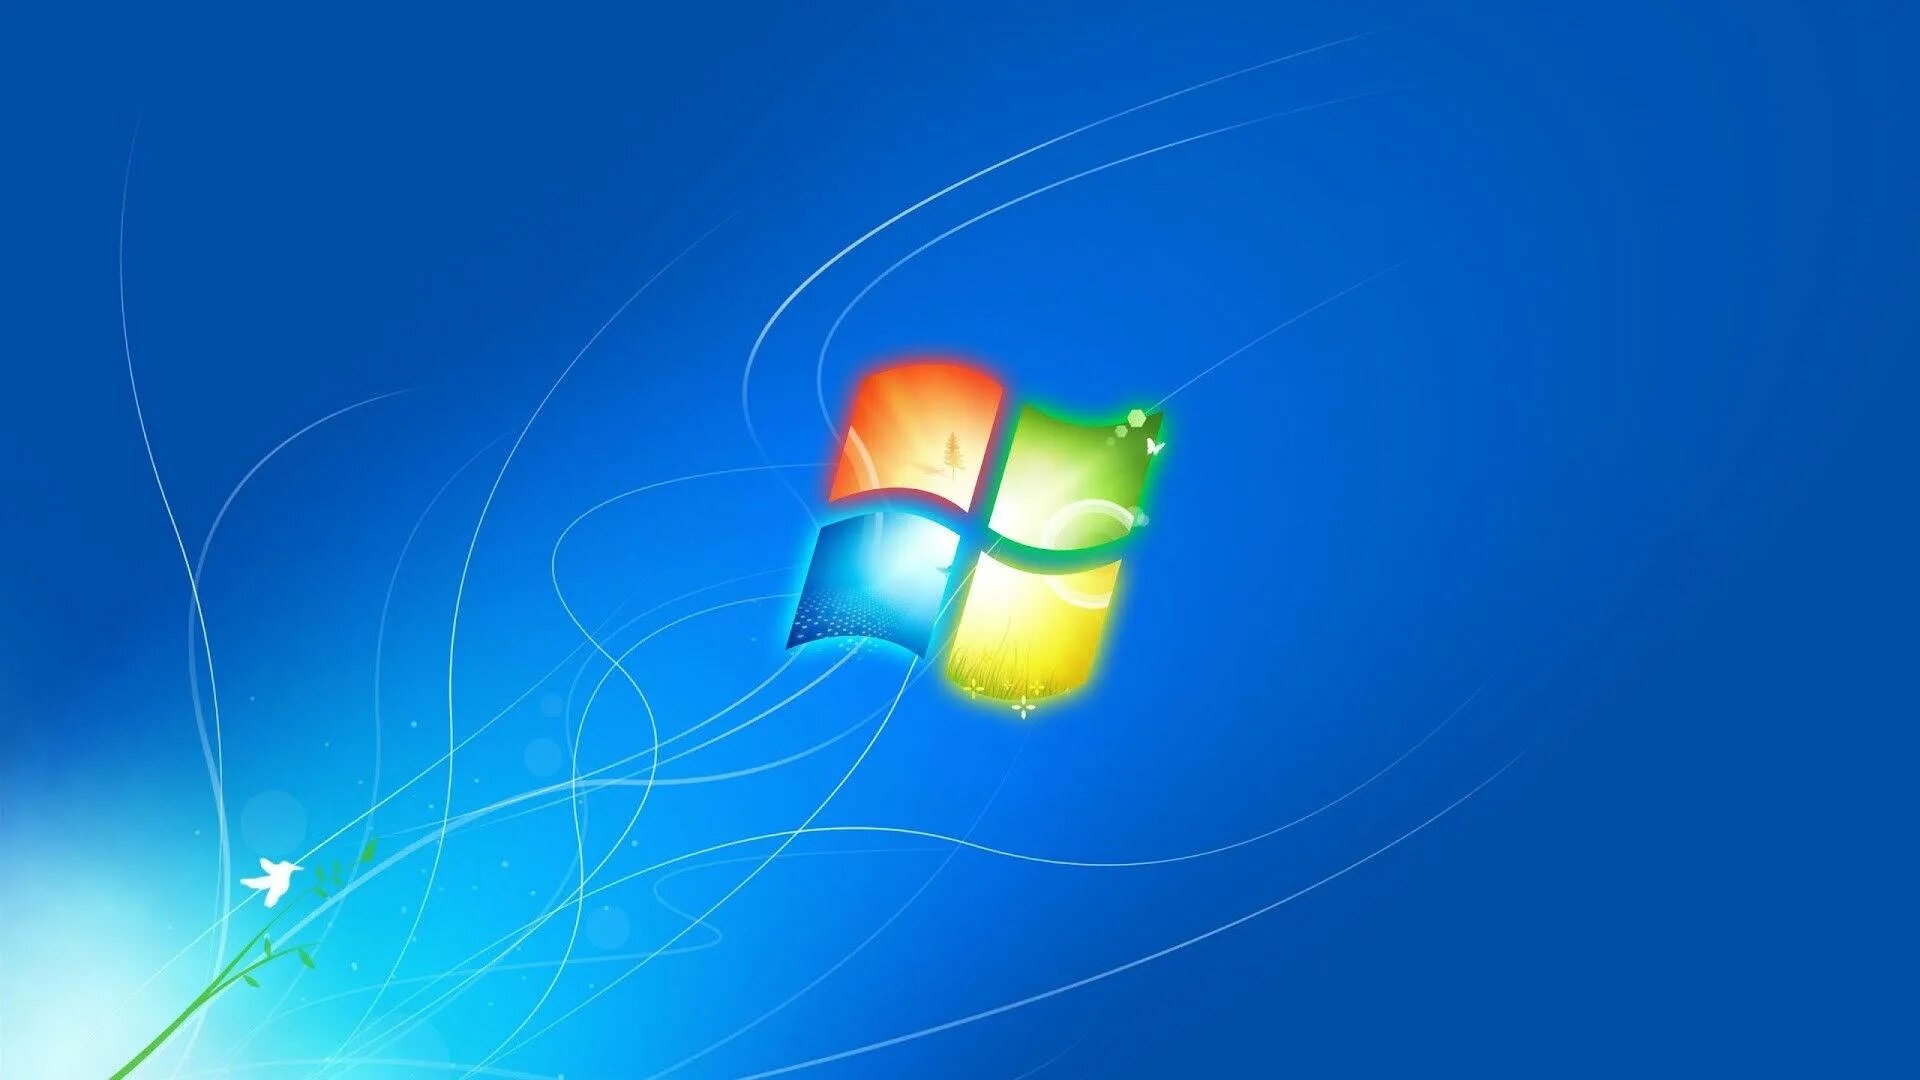 Windows 7 programs. Виндовс 7. Заставка виндовс. Обои Windows 7. Логотип Windows 7.